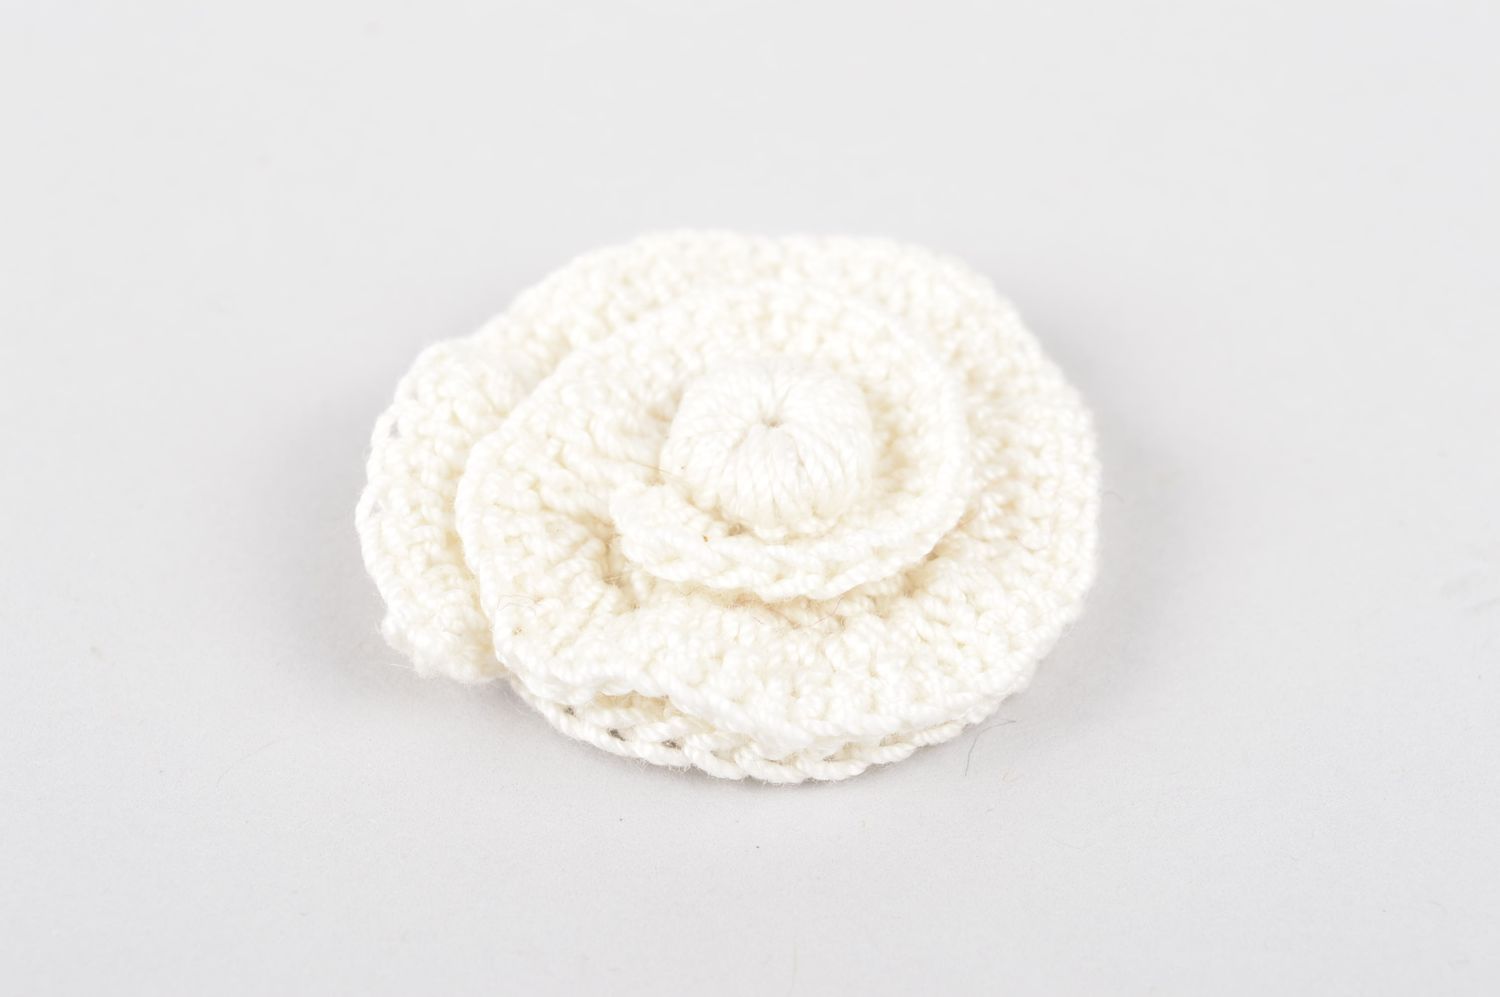 Handmade crocheted flower blank designer cute fittings blank for jewelry photo 2